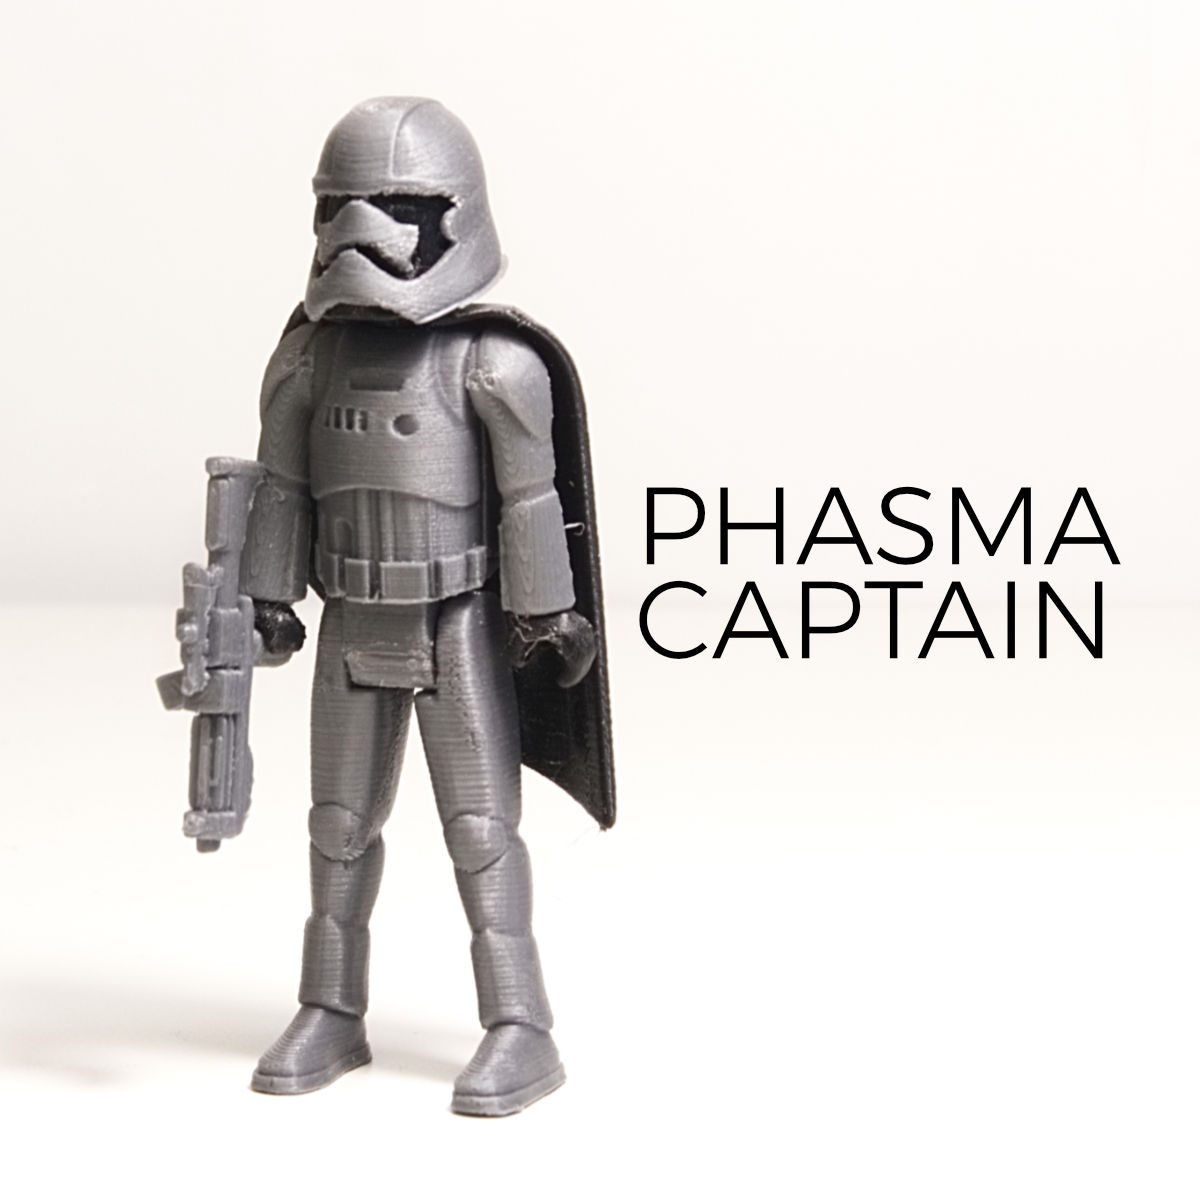 Phasma Captain